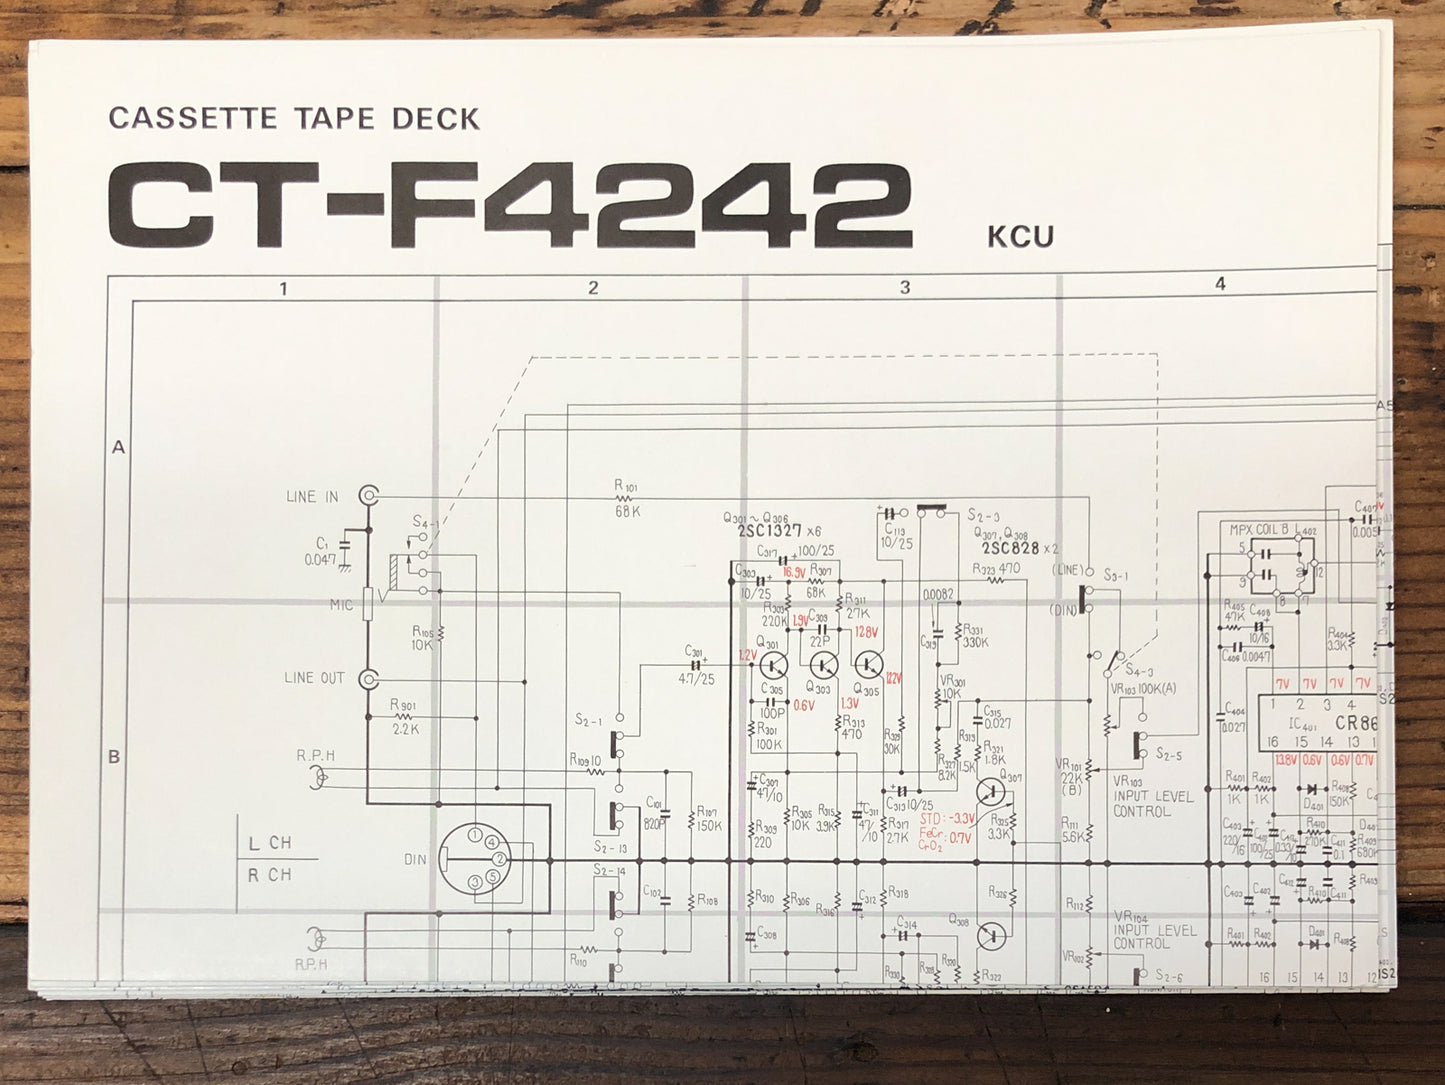 Pioneer CF-F4242 Cassette Foldout Service Manual *Original*